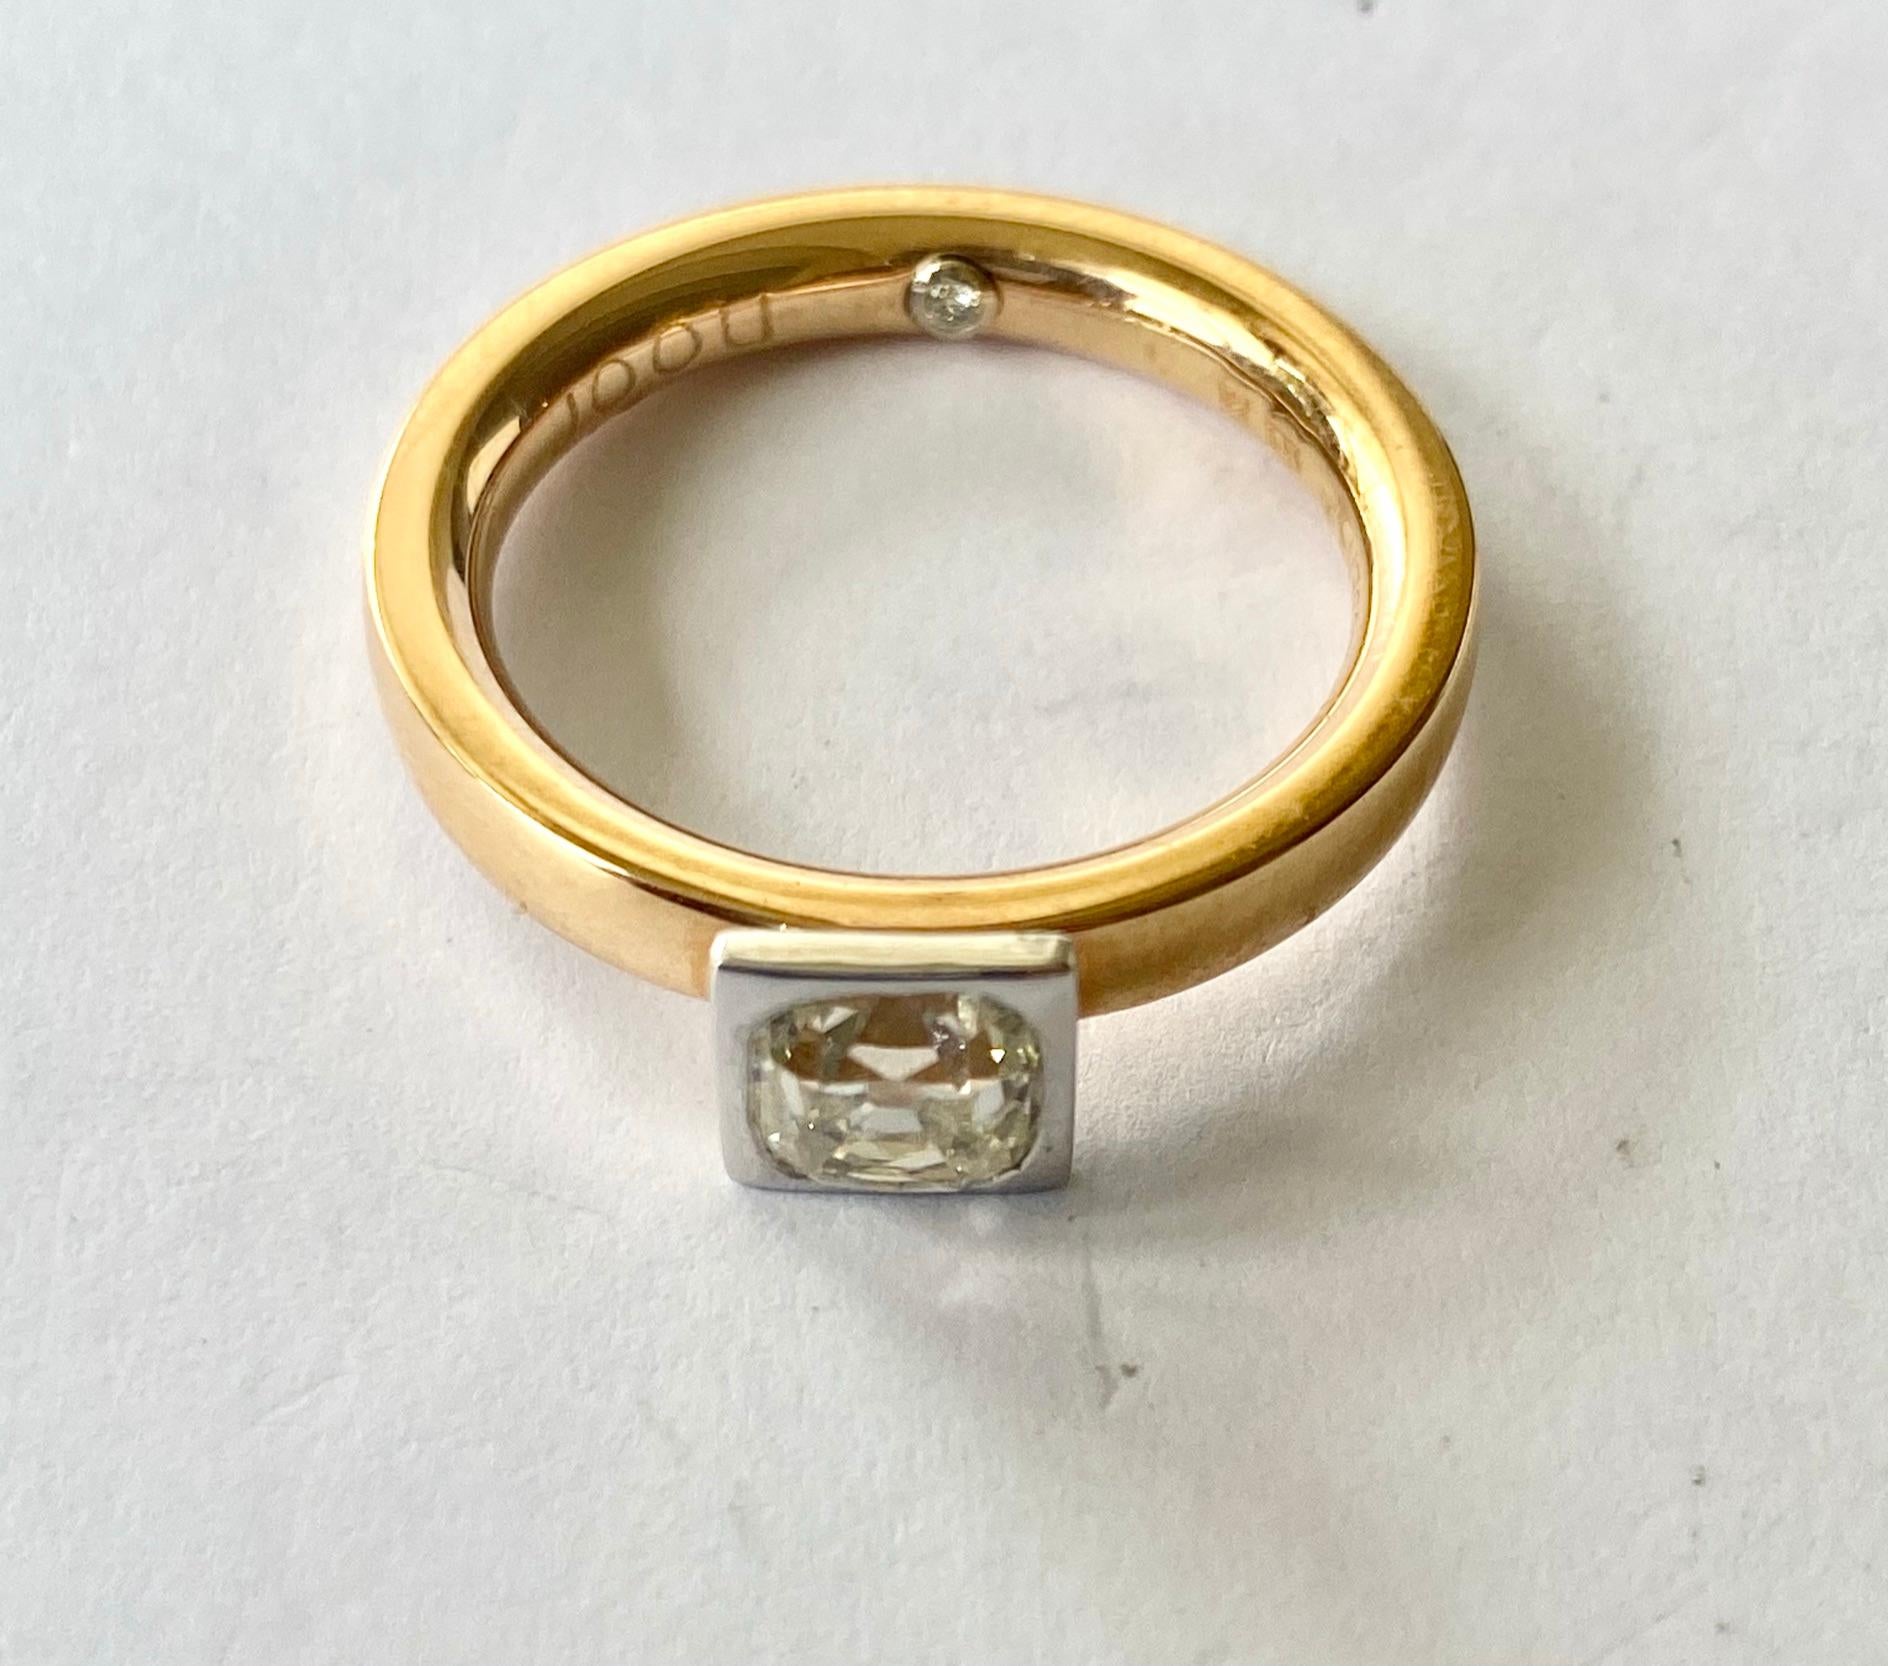 20.03-carat emerald-cut engagement ring